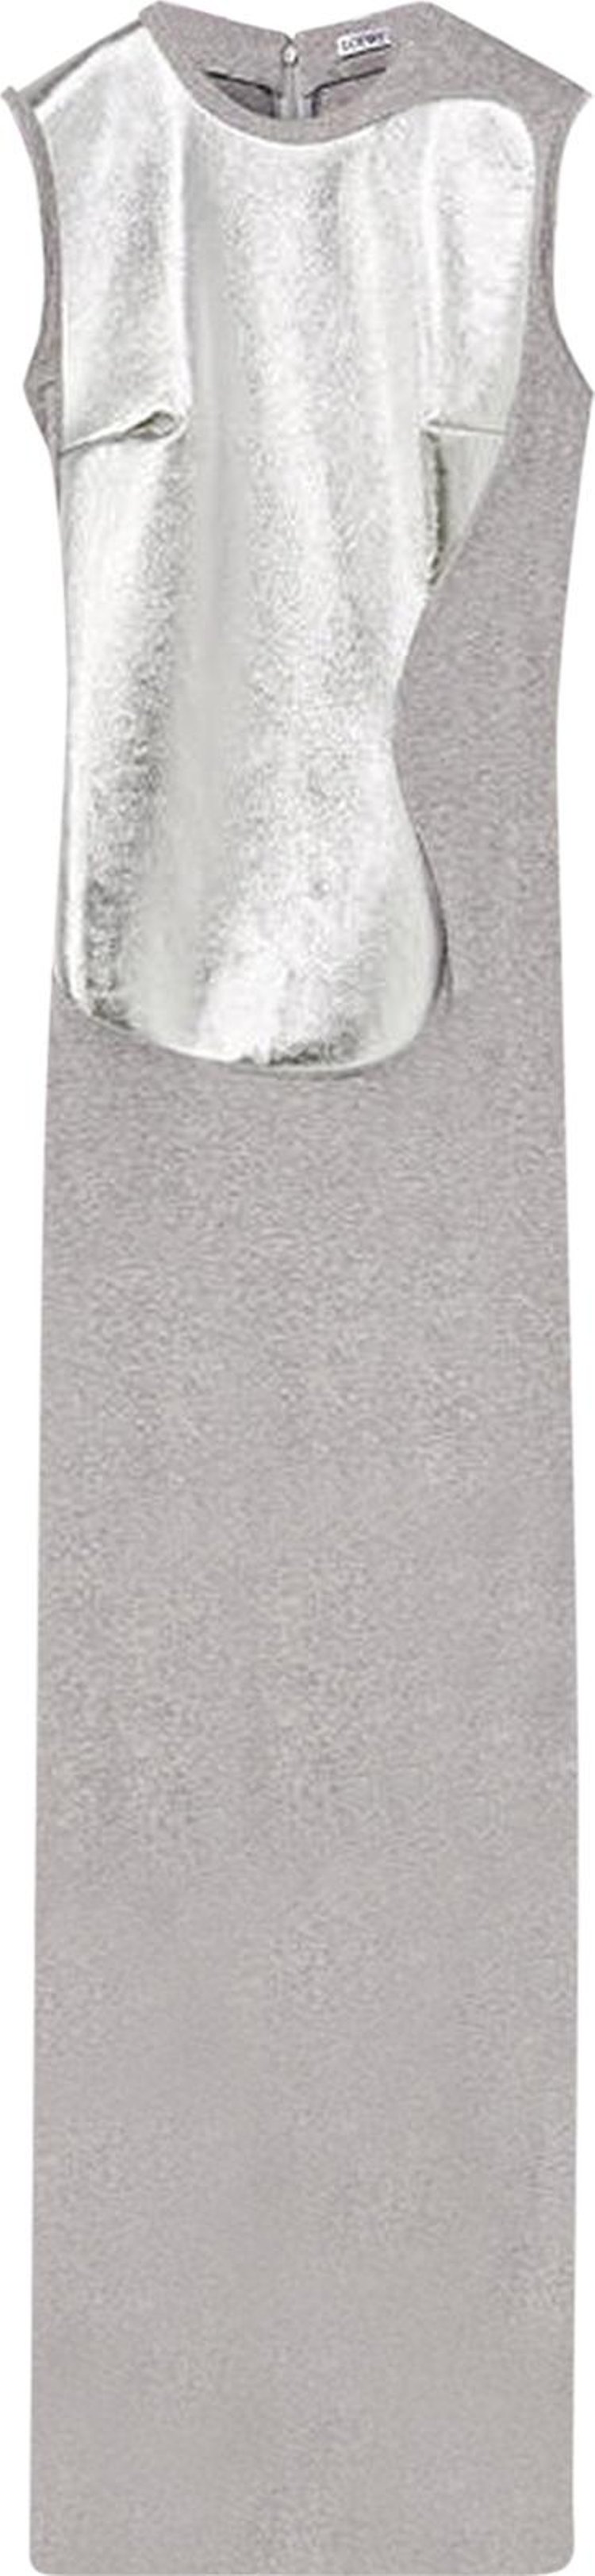 Loewe Leather Panel Long Dress 'Grey/Silver'